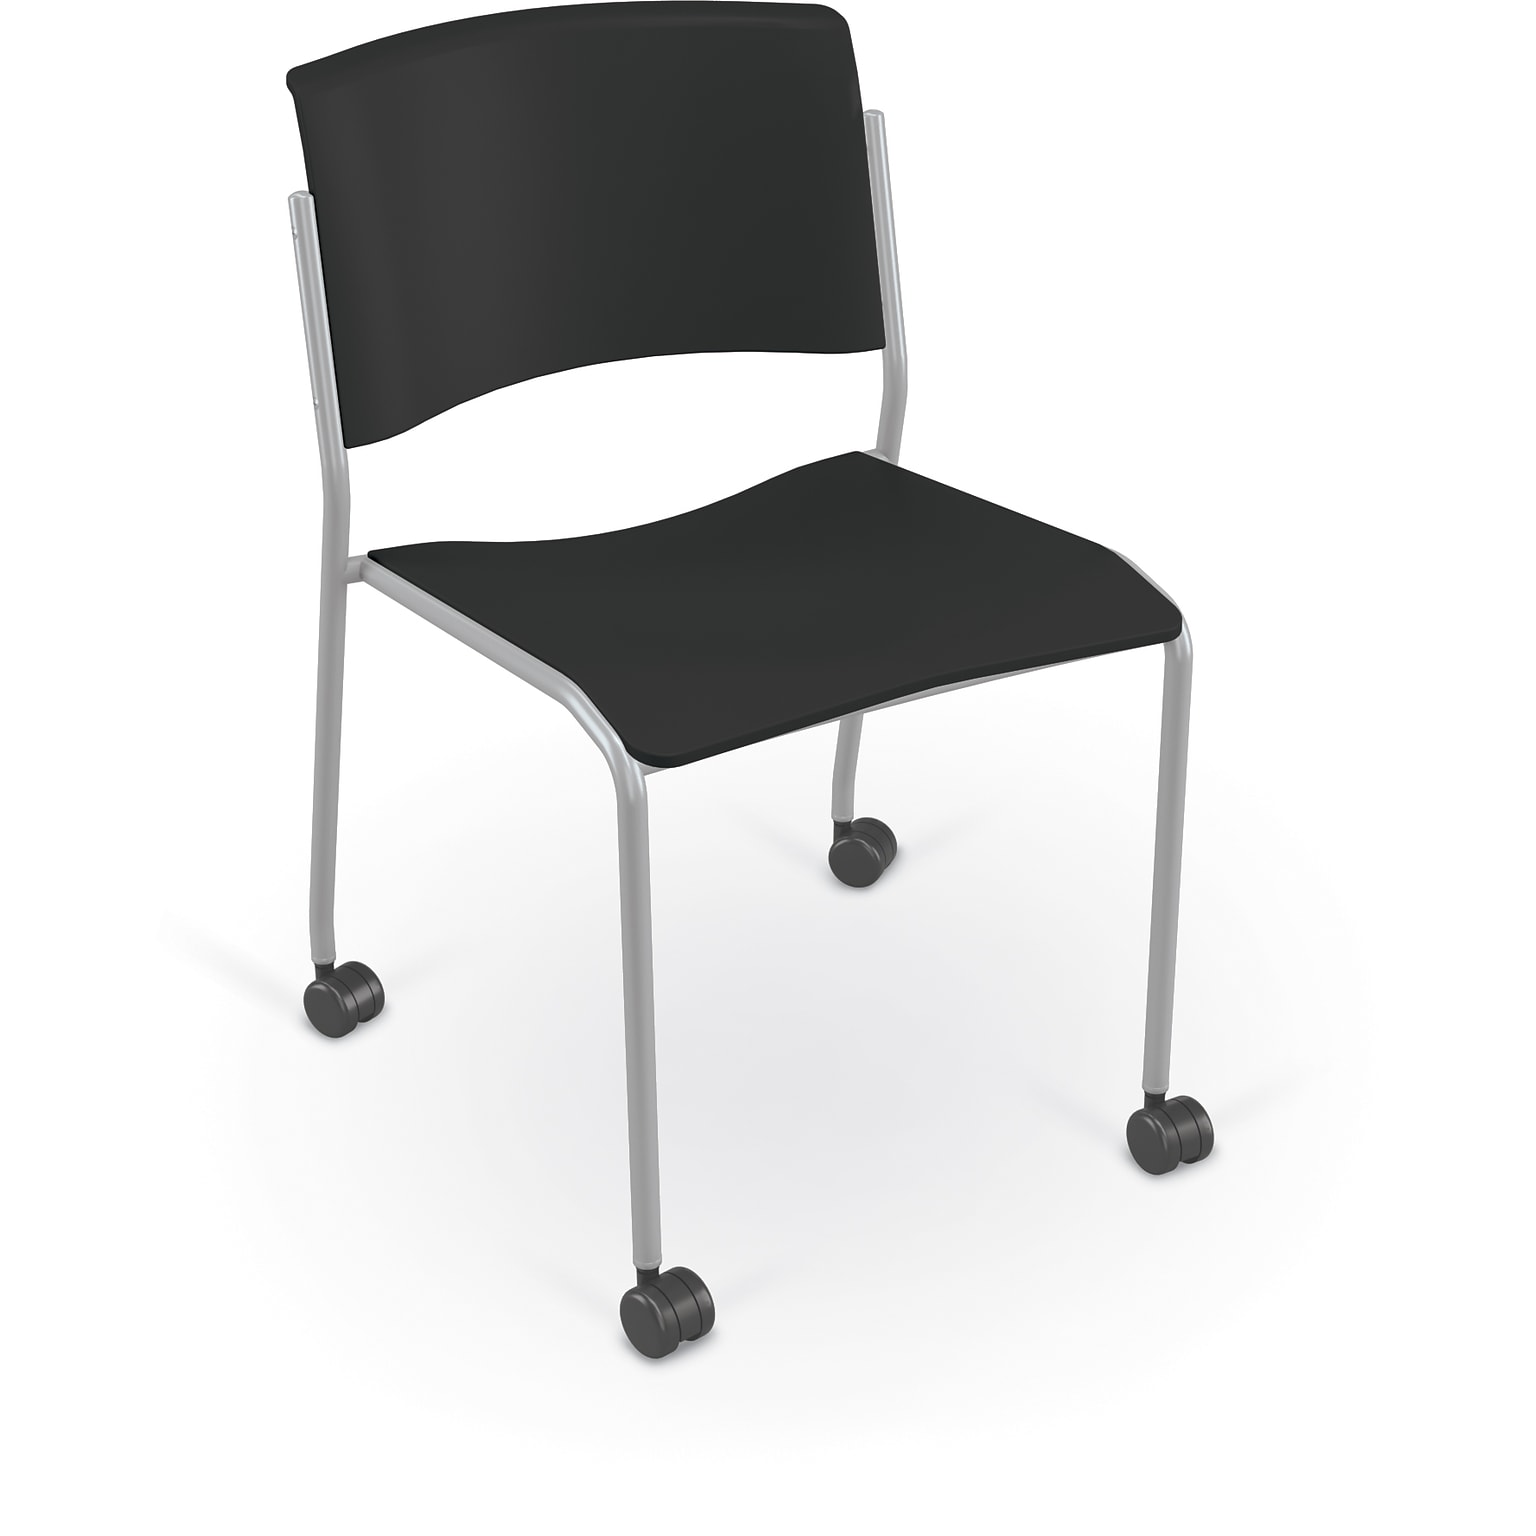 MooreCo Akt 4-Leg Caster Student Chair, Soft Casters, Black (56579-SC-BLACK)